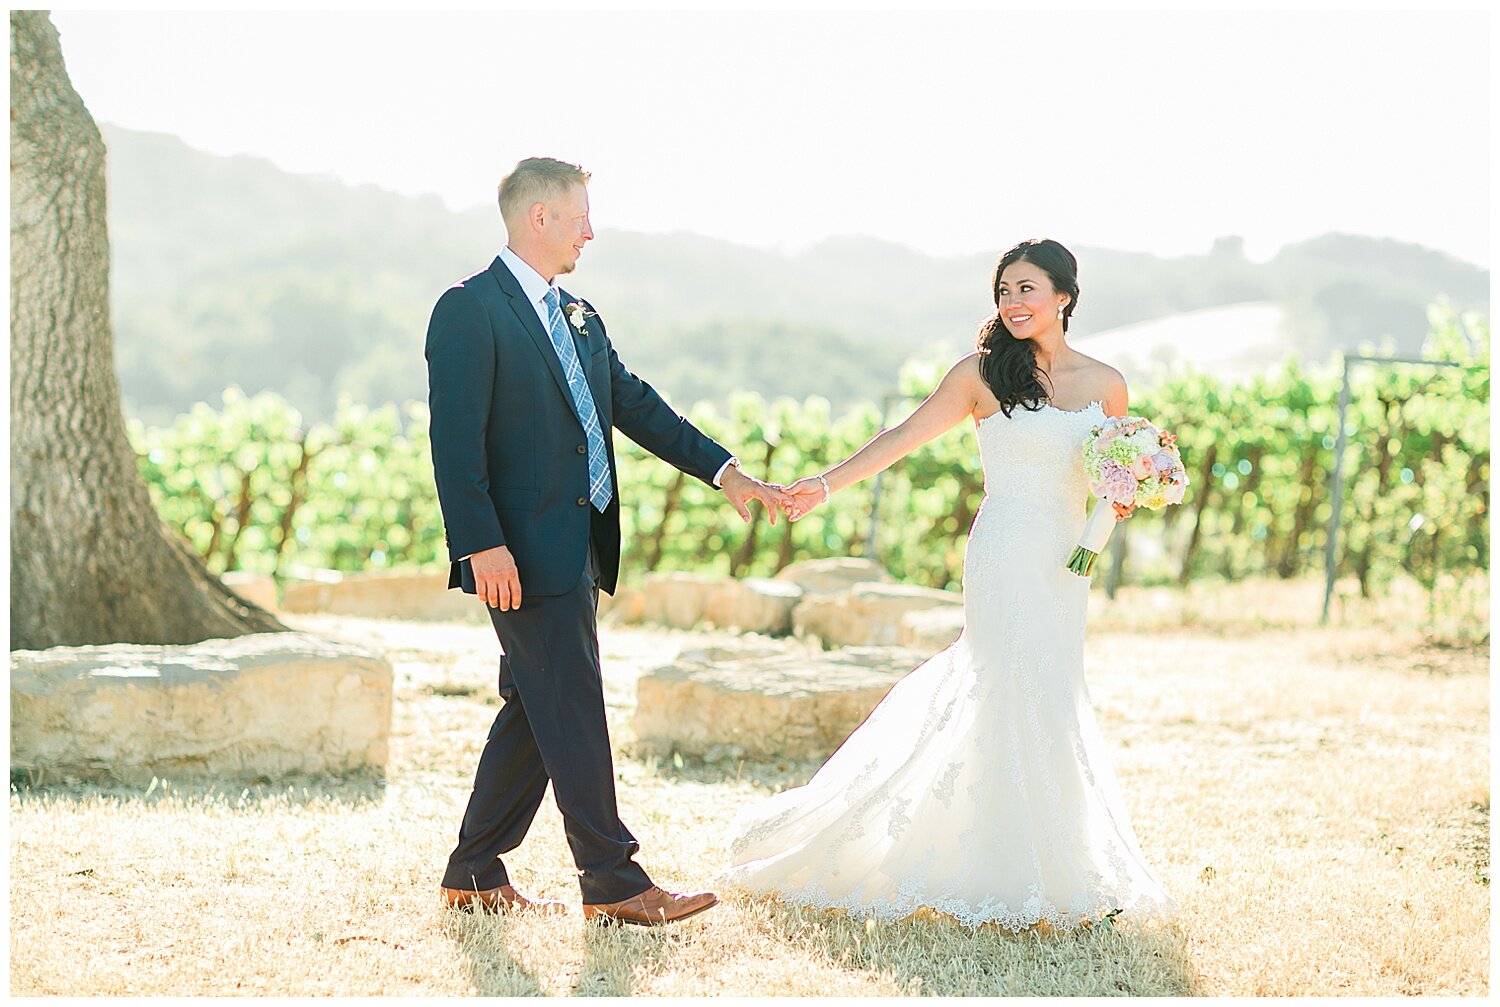 Reina and Jason's Wedding at HammerSky Vineyards | Meagan Ramirez Photography